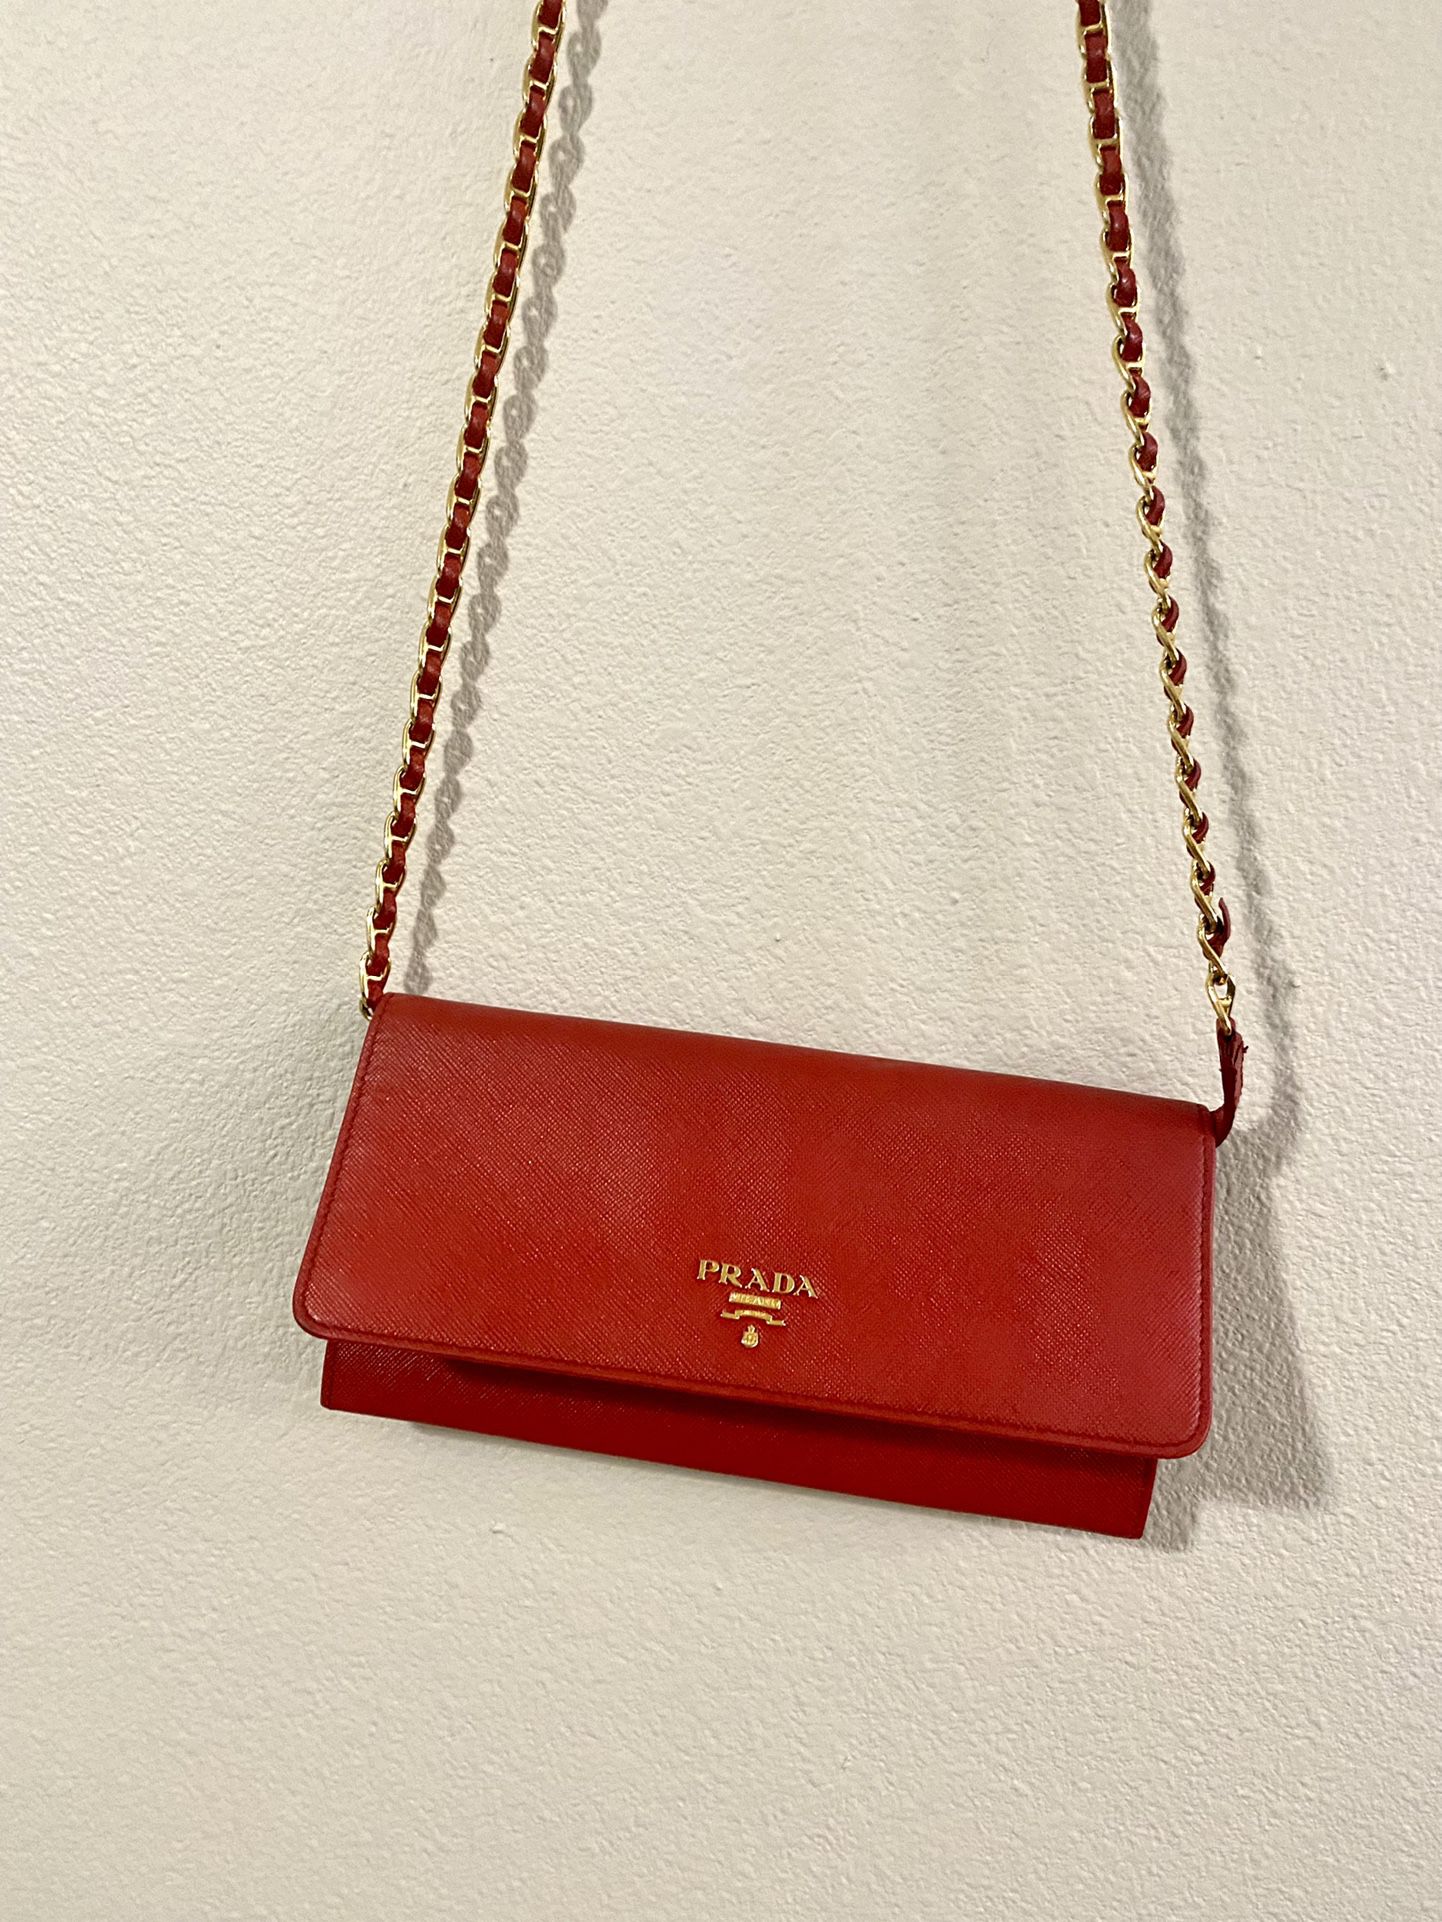 Prada Saffiano Leather Wallet-on-Chain